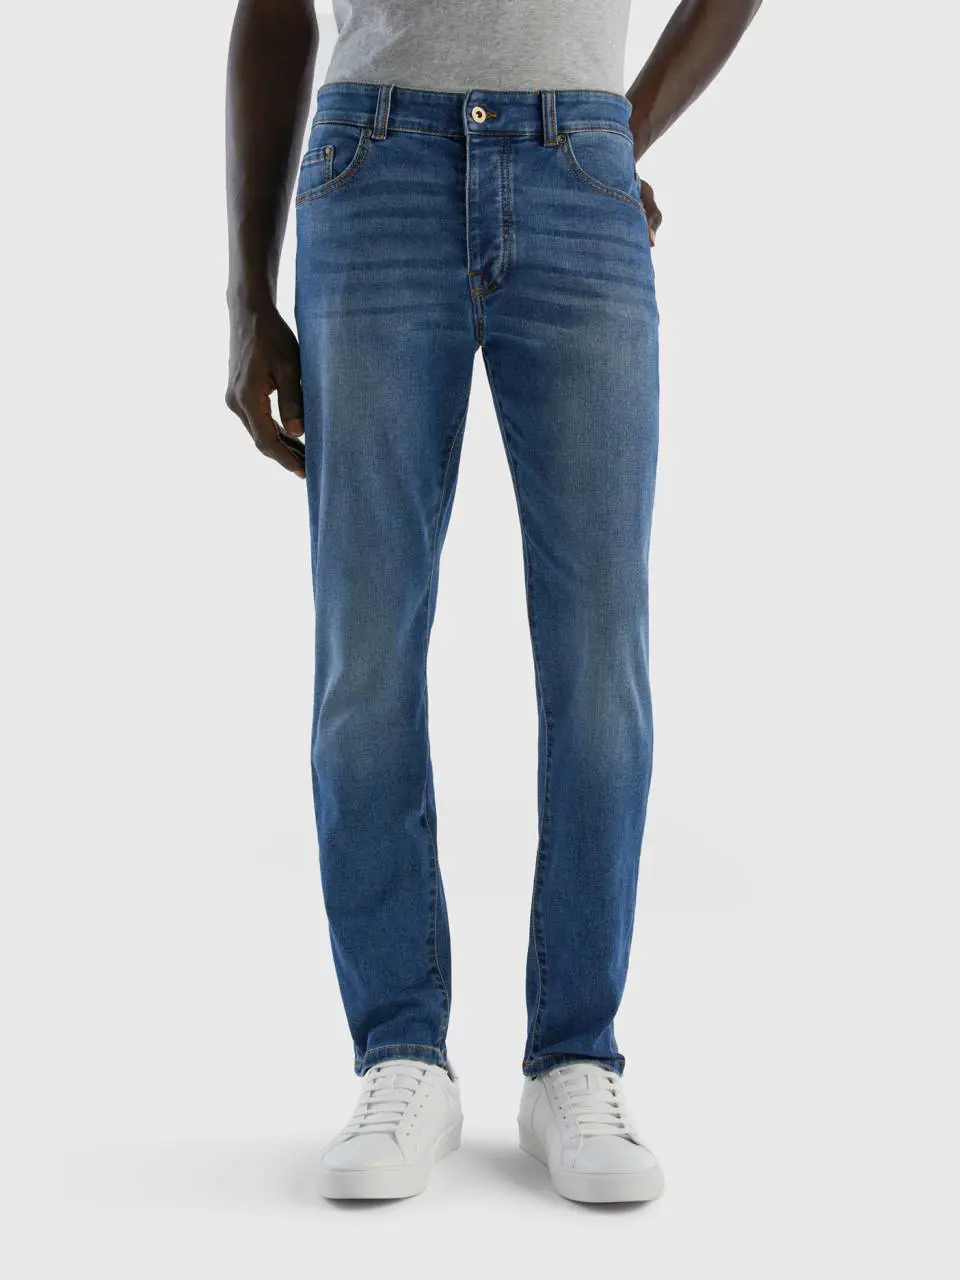 Benetton five pocket slim fit jeans. 1